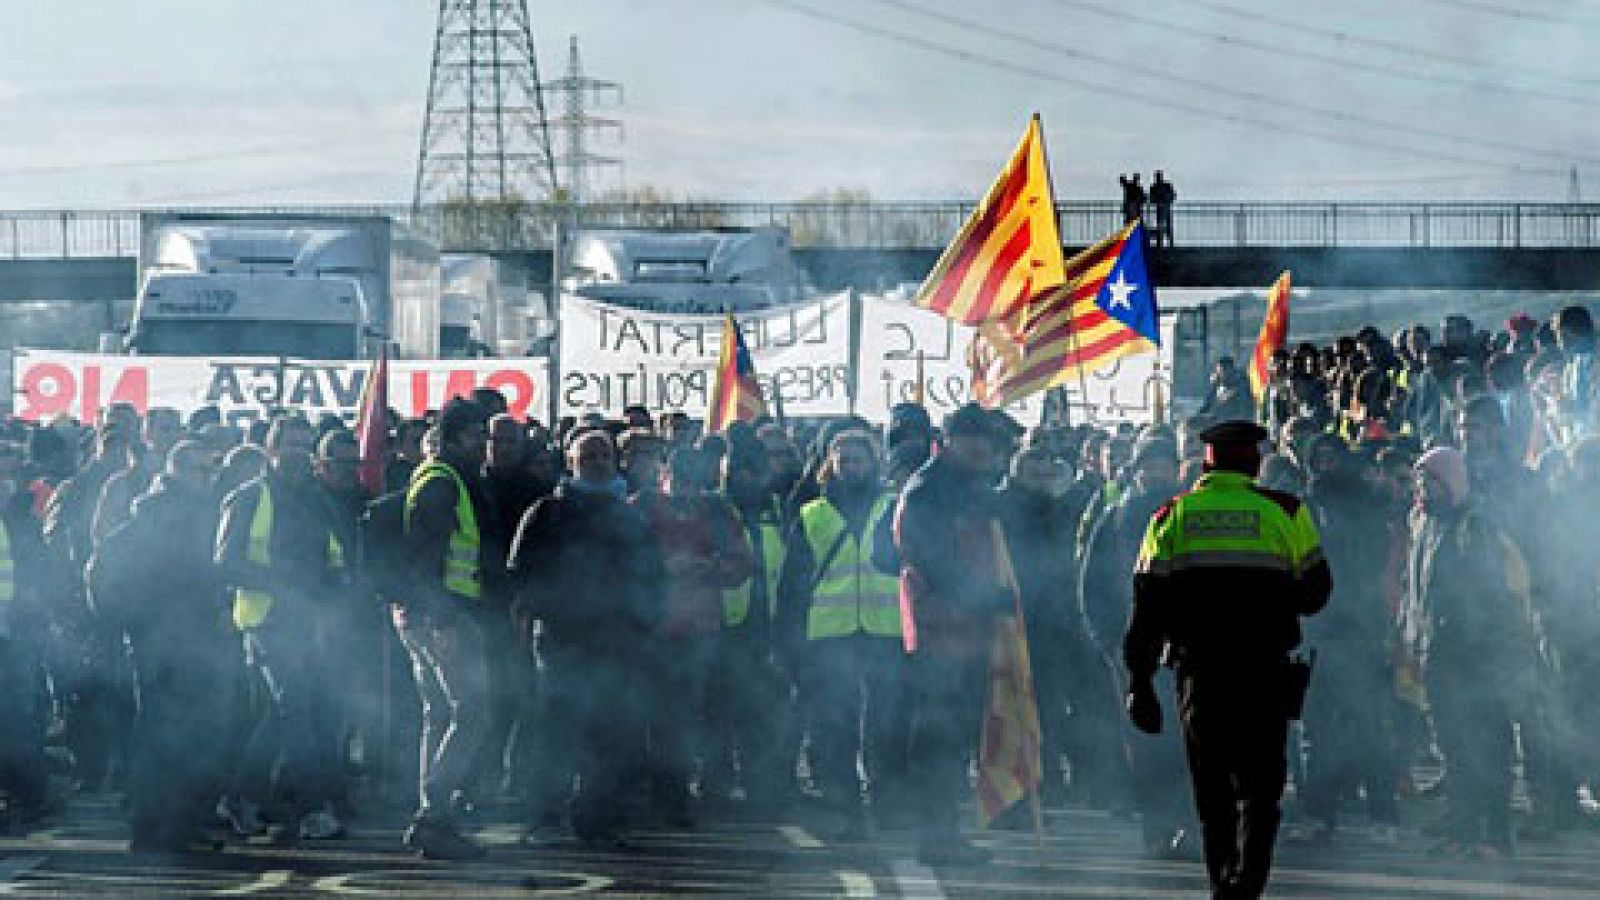 Telediario 1: Jornada de huelga general en Cataluña convocada por la Intersindical-CSC  | RTVE Play